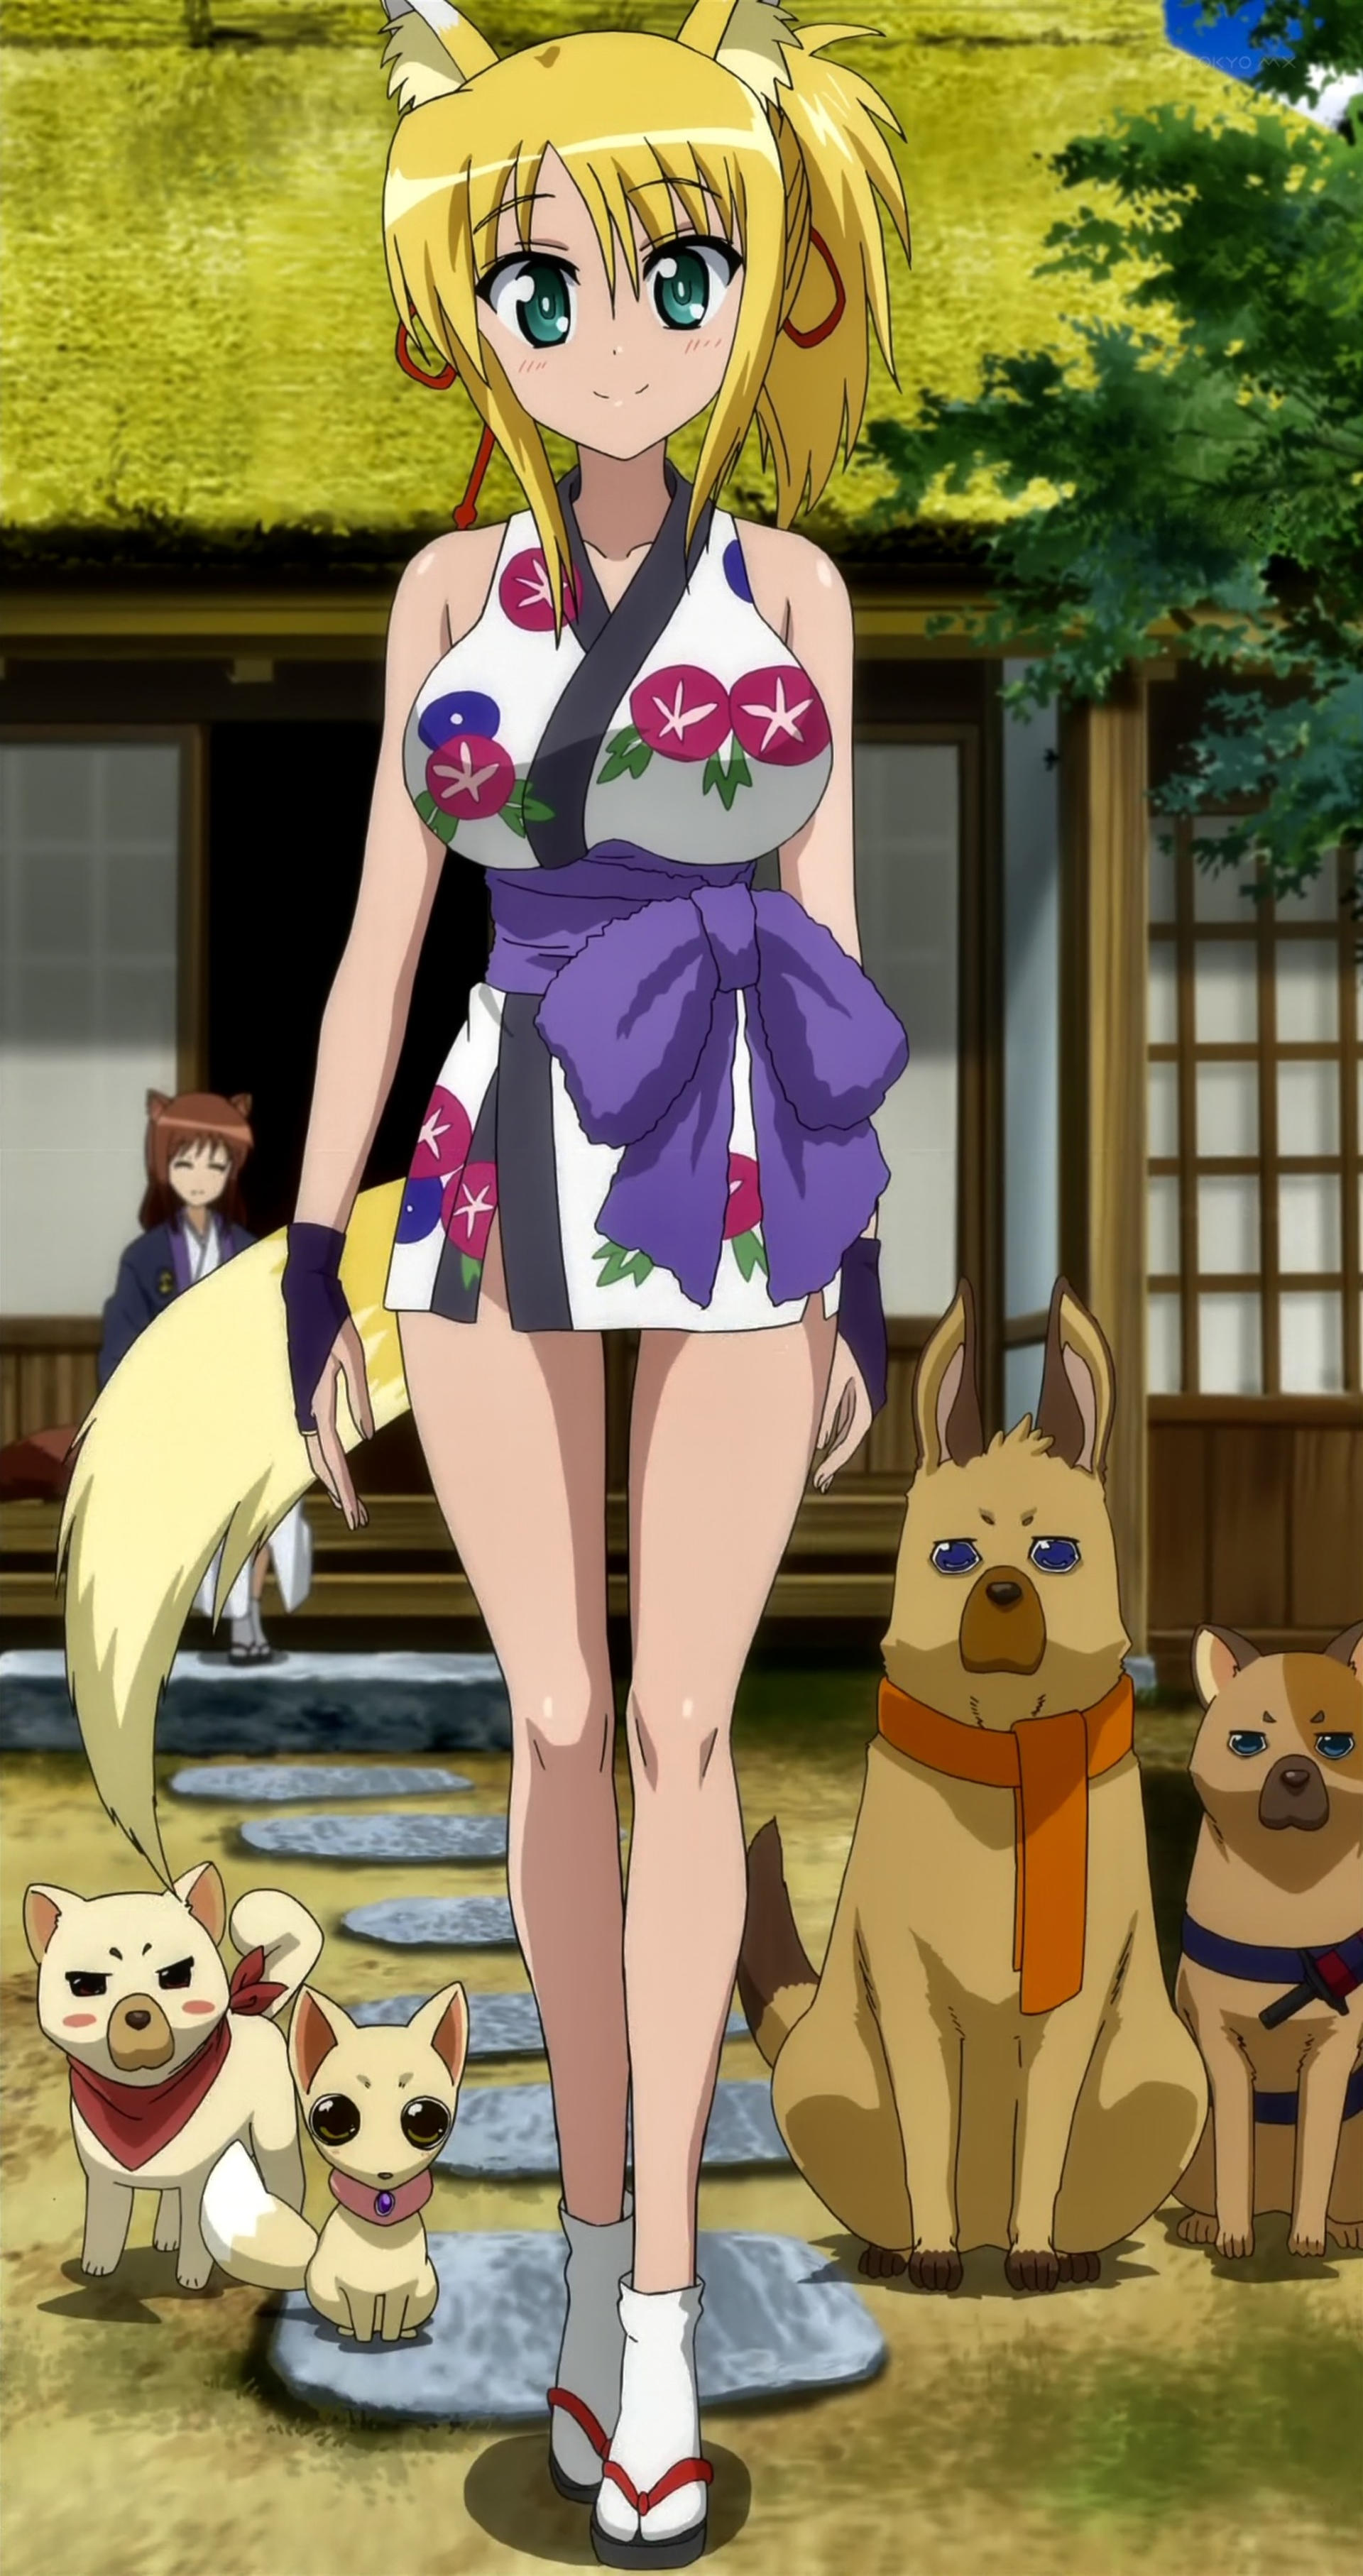 Waifu Tower on X: Yukikaze Panettone (Part 2) Anime: Dog Days